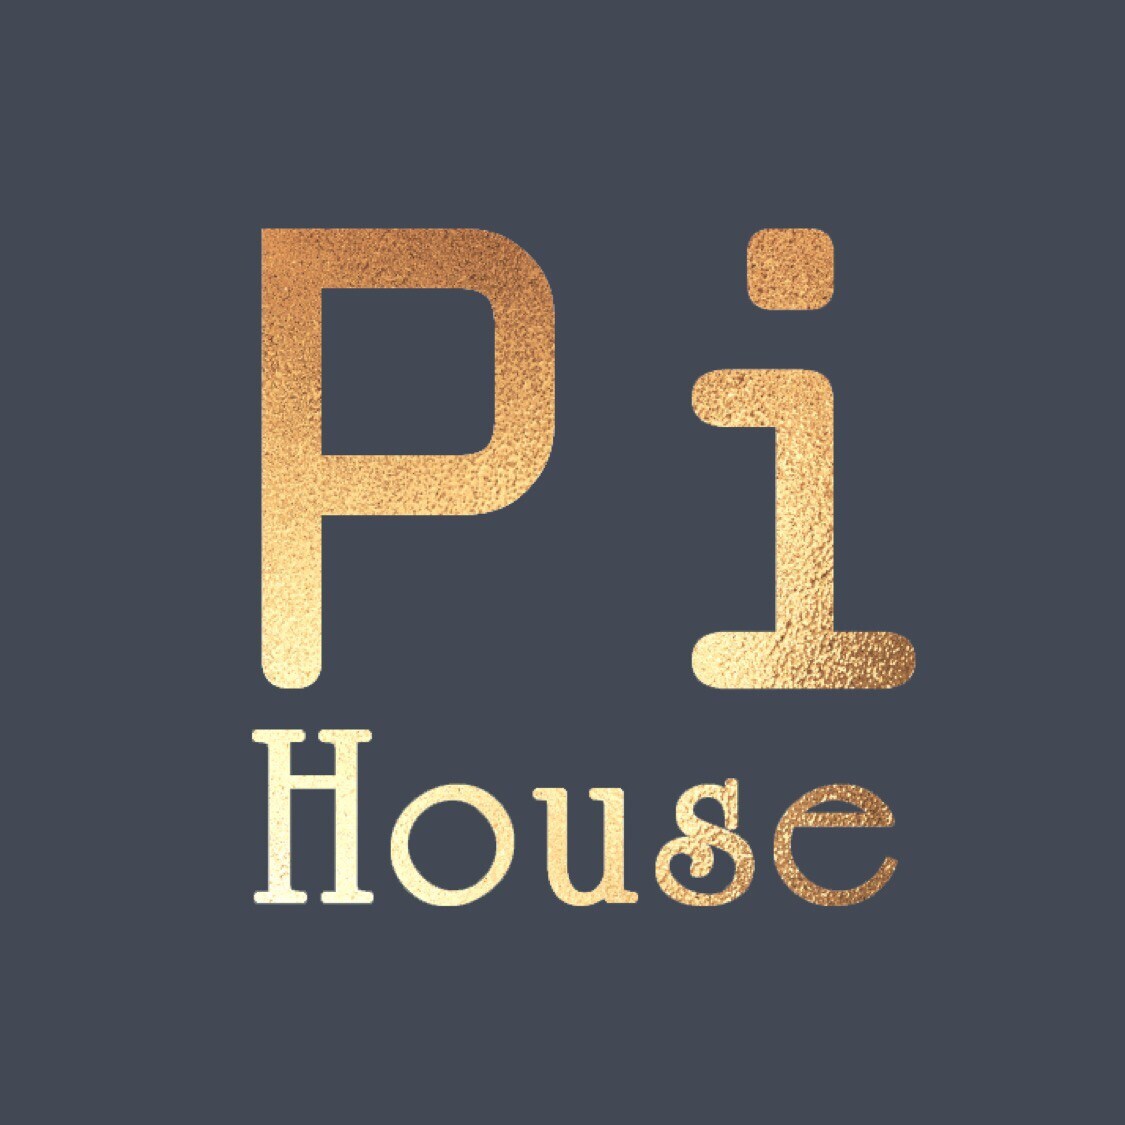 Pi house可供出租